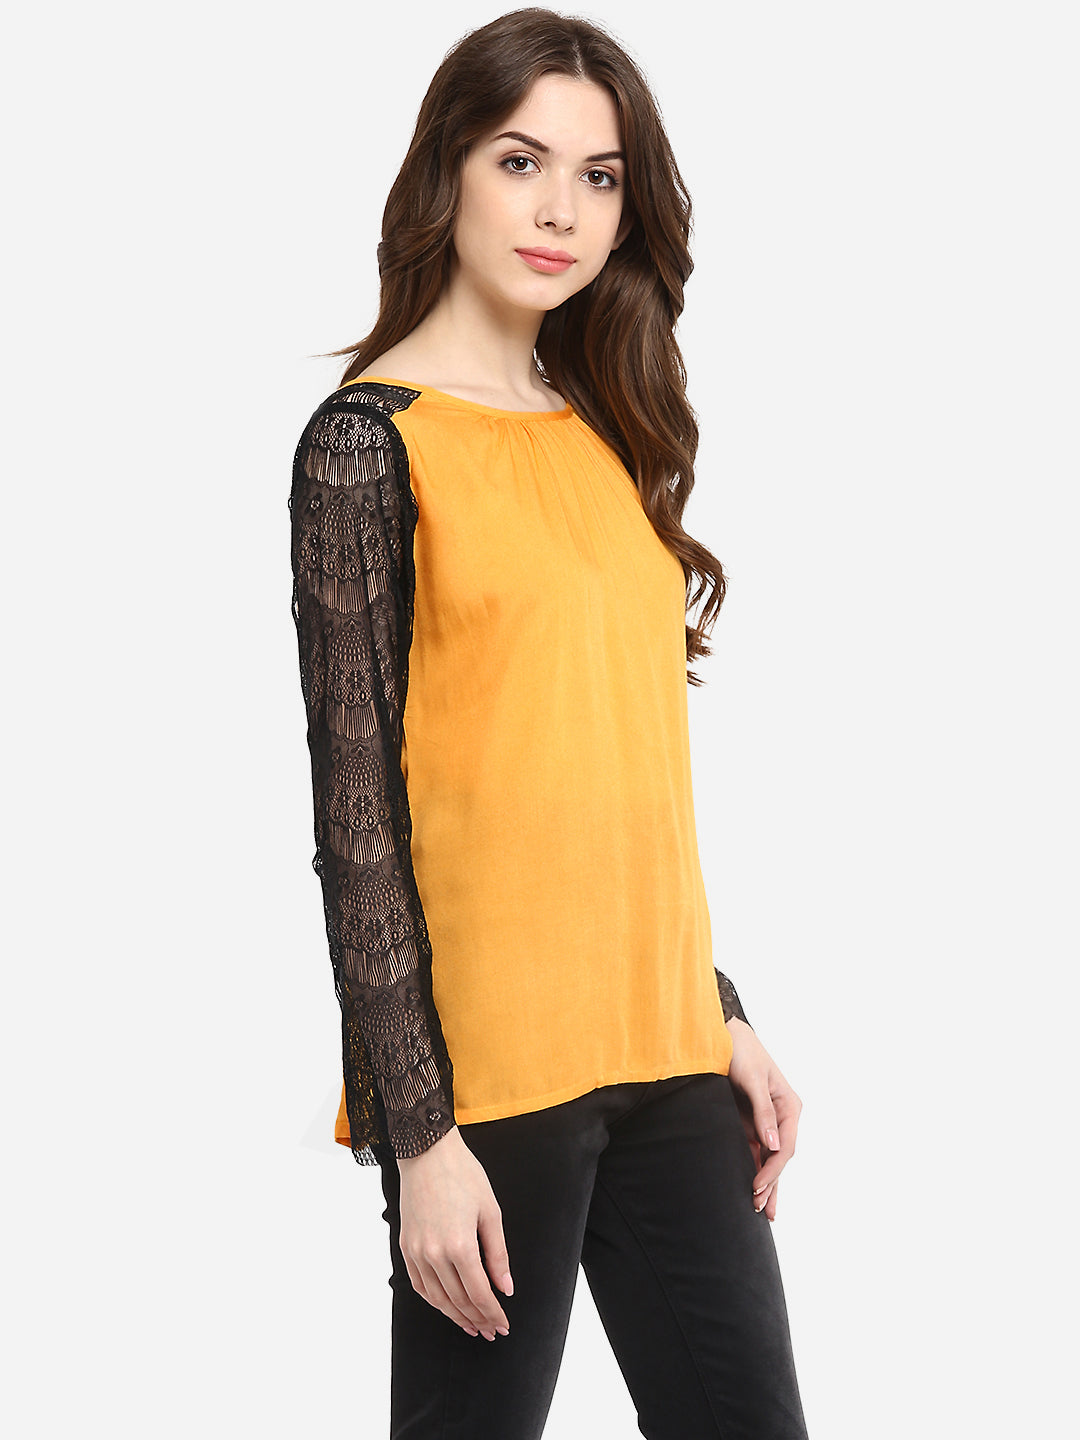 Women's Mustard Yellow Rayon Black Lace Sleeve Top